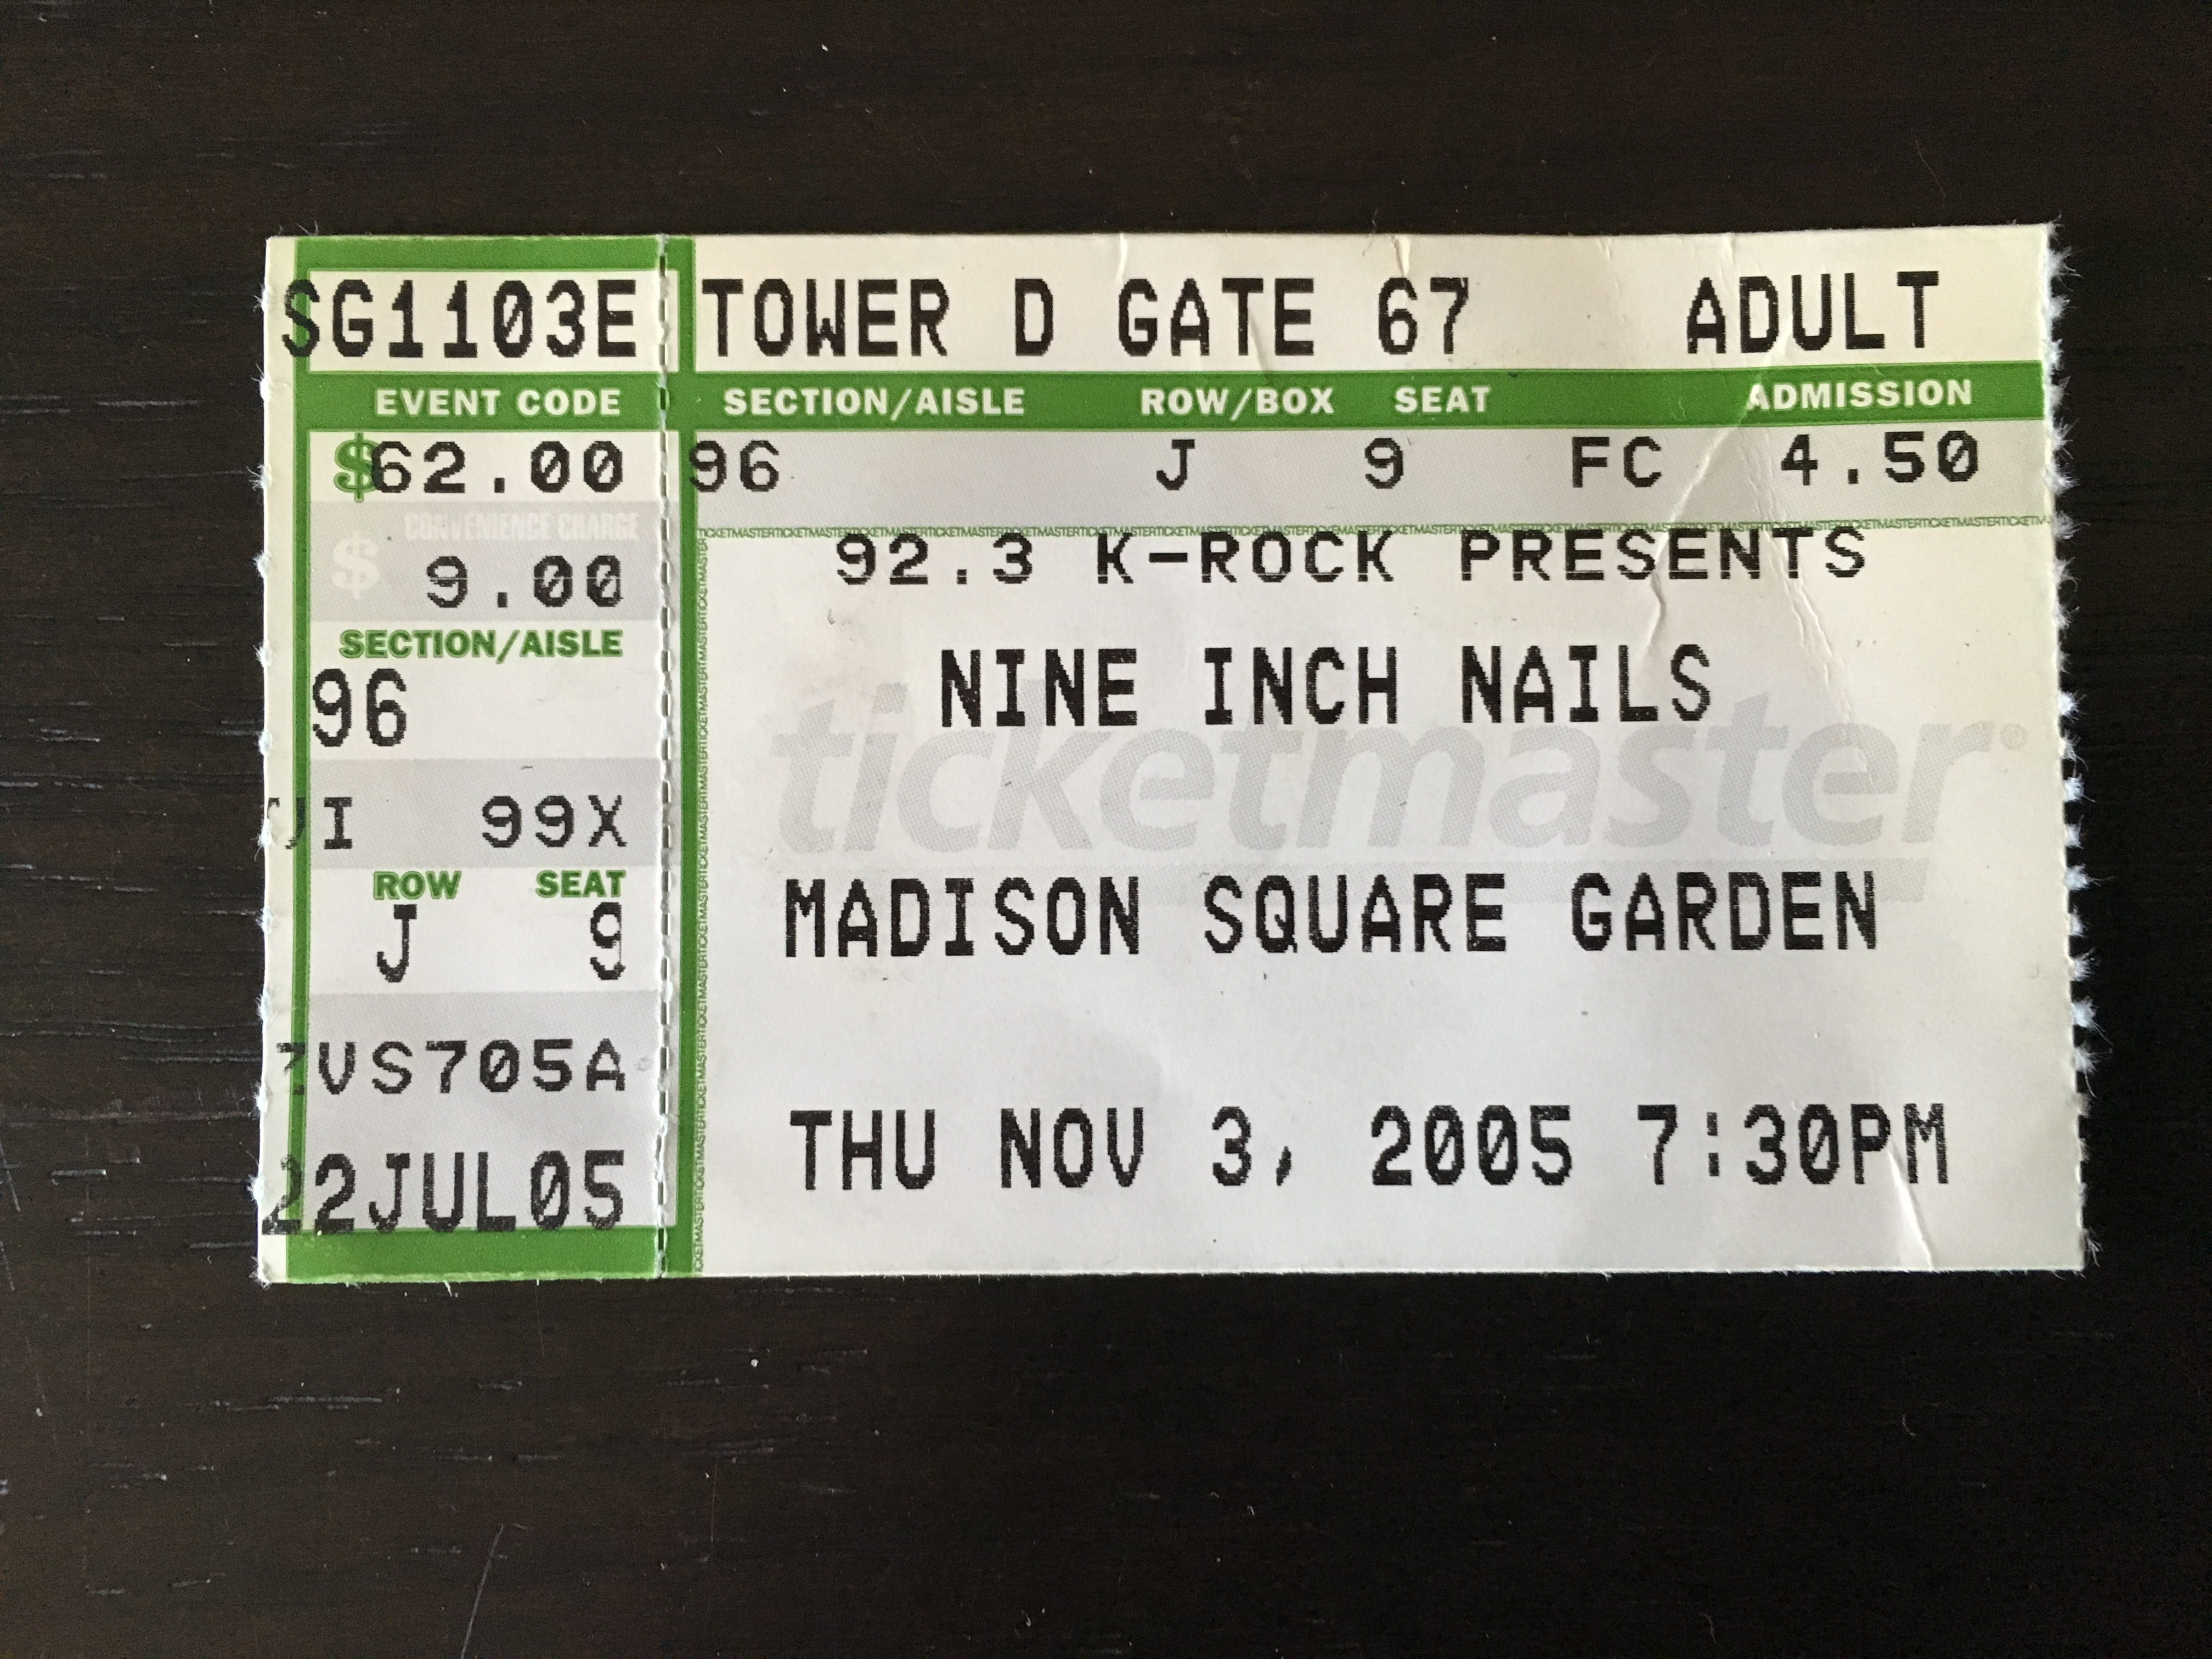 2005/11/03 Ticket